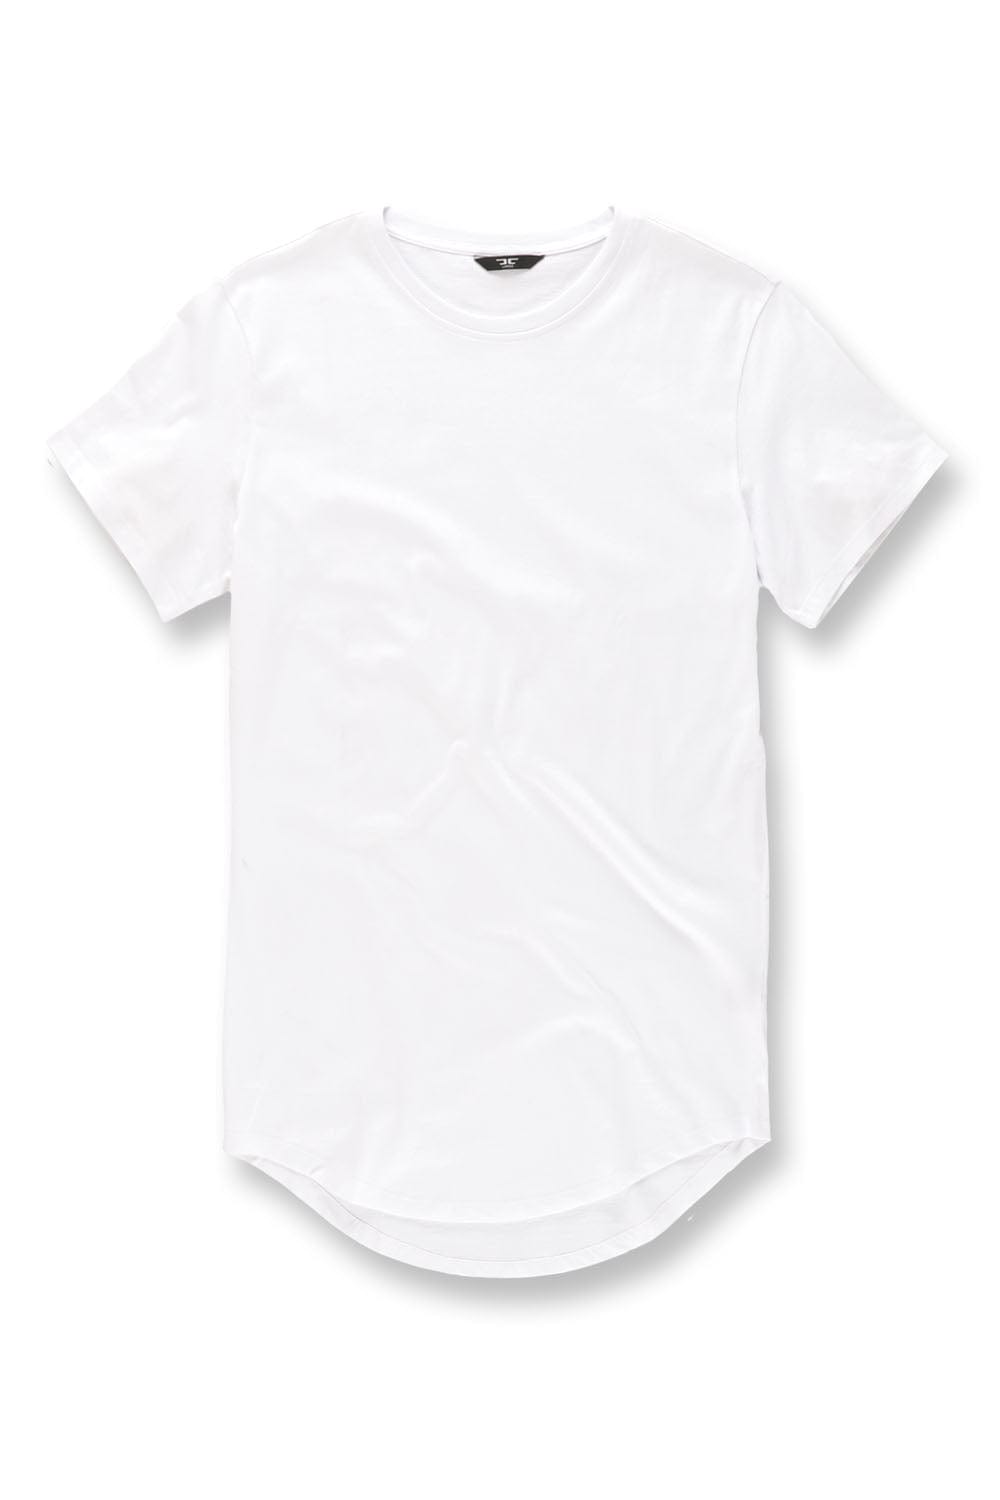 JC Big Men Big Men's Scallop T-Shirt (Name Your Price)